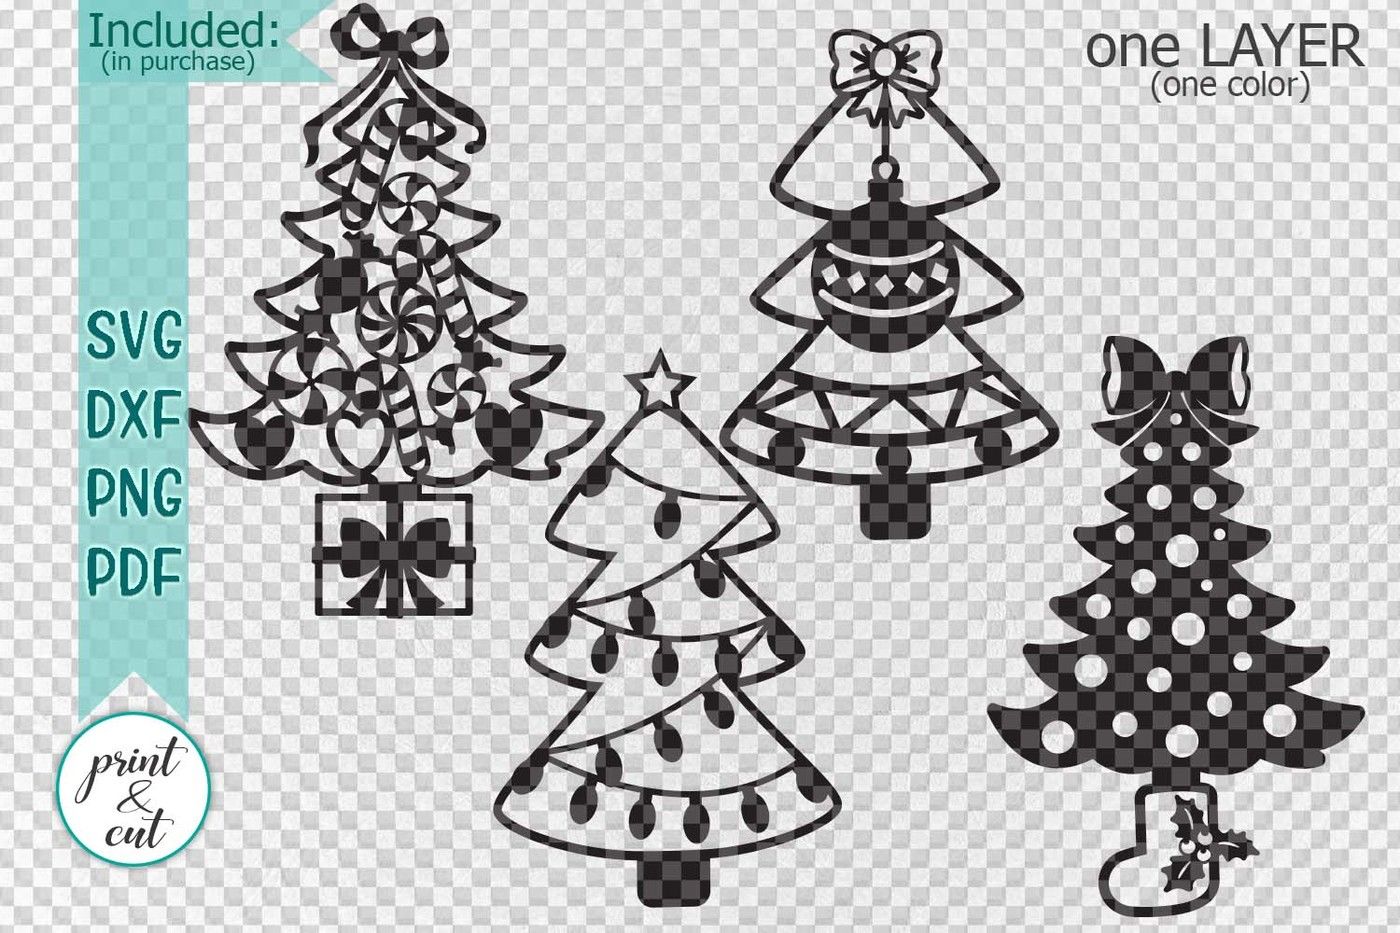 Christmas Trees Bundle Papercutting Template Svg Dxf Cut Files By Kartcreation Thehungryjpeg Com